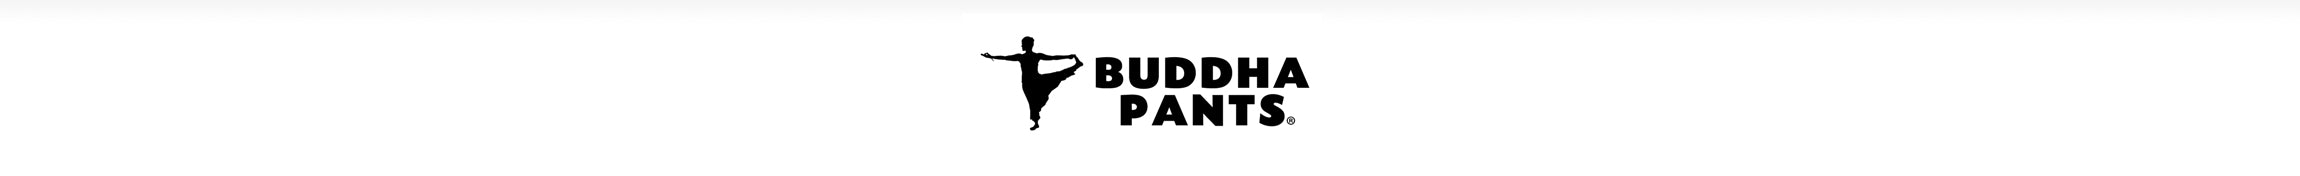 Buddha Pants